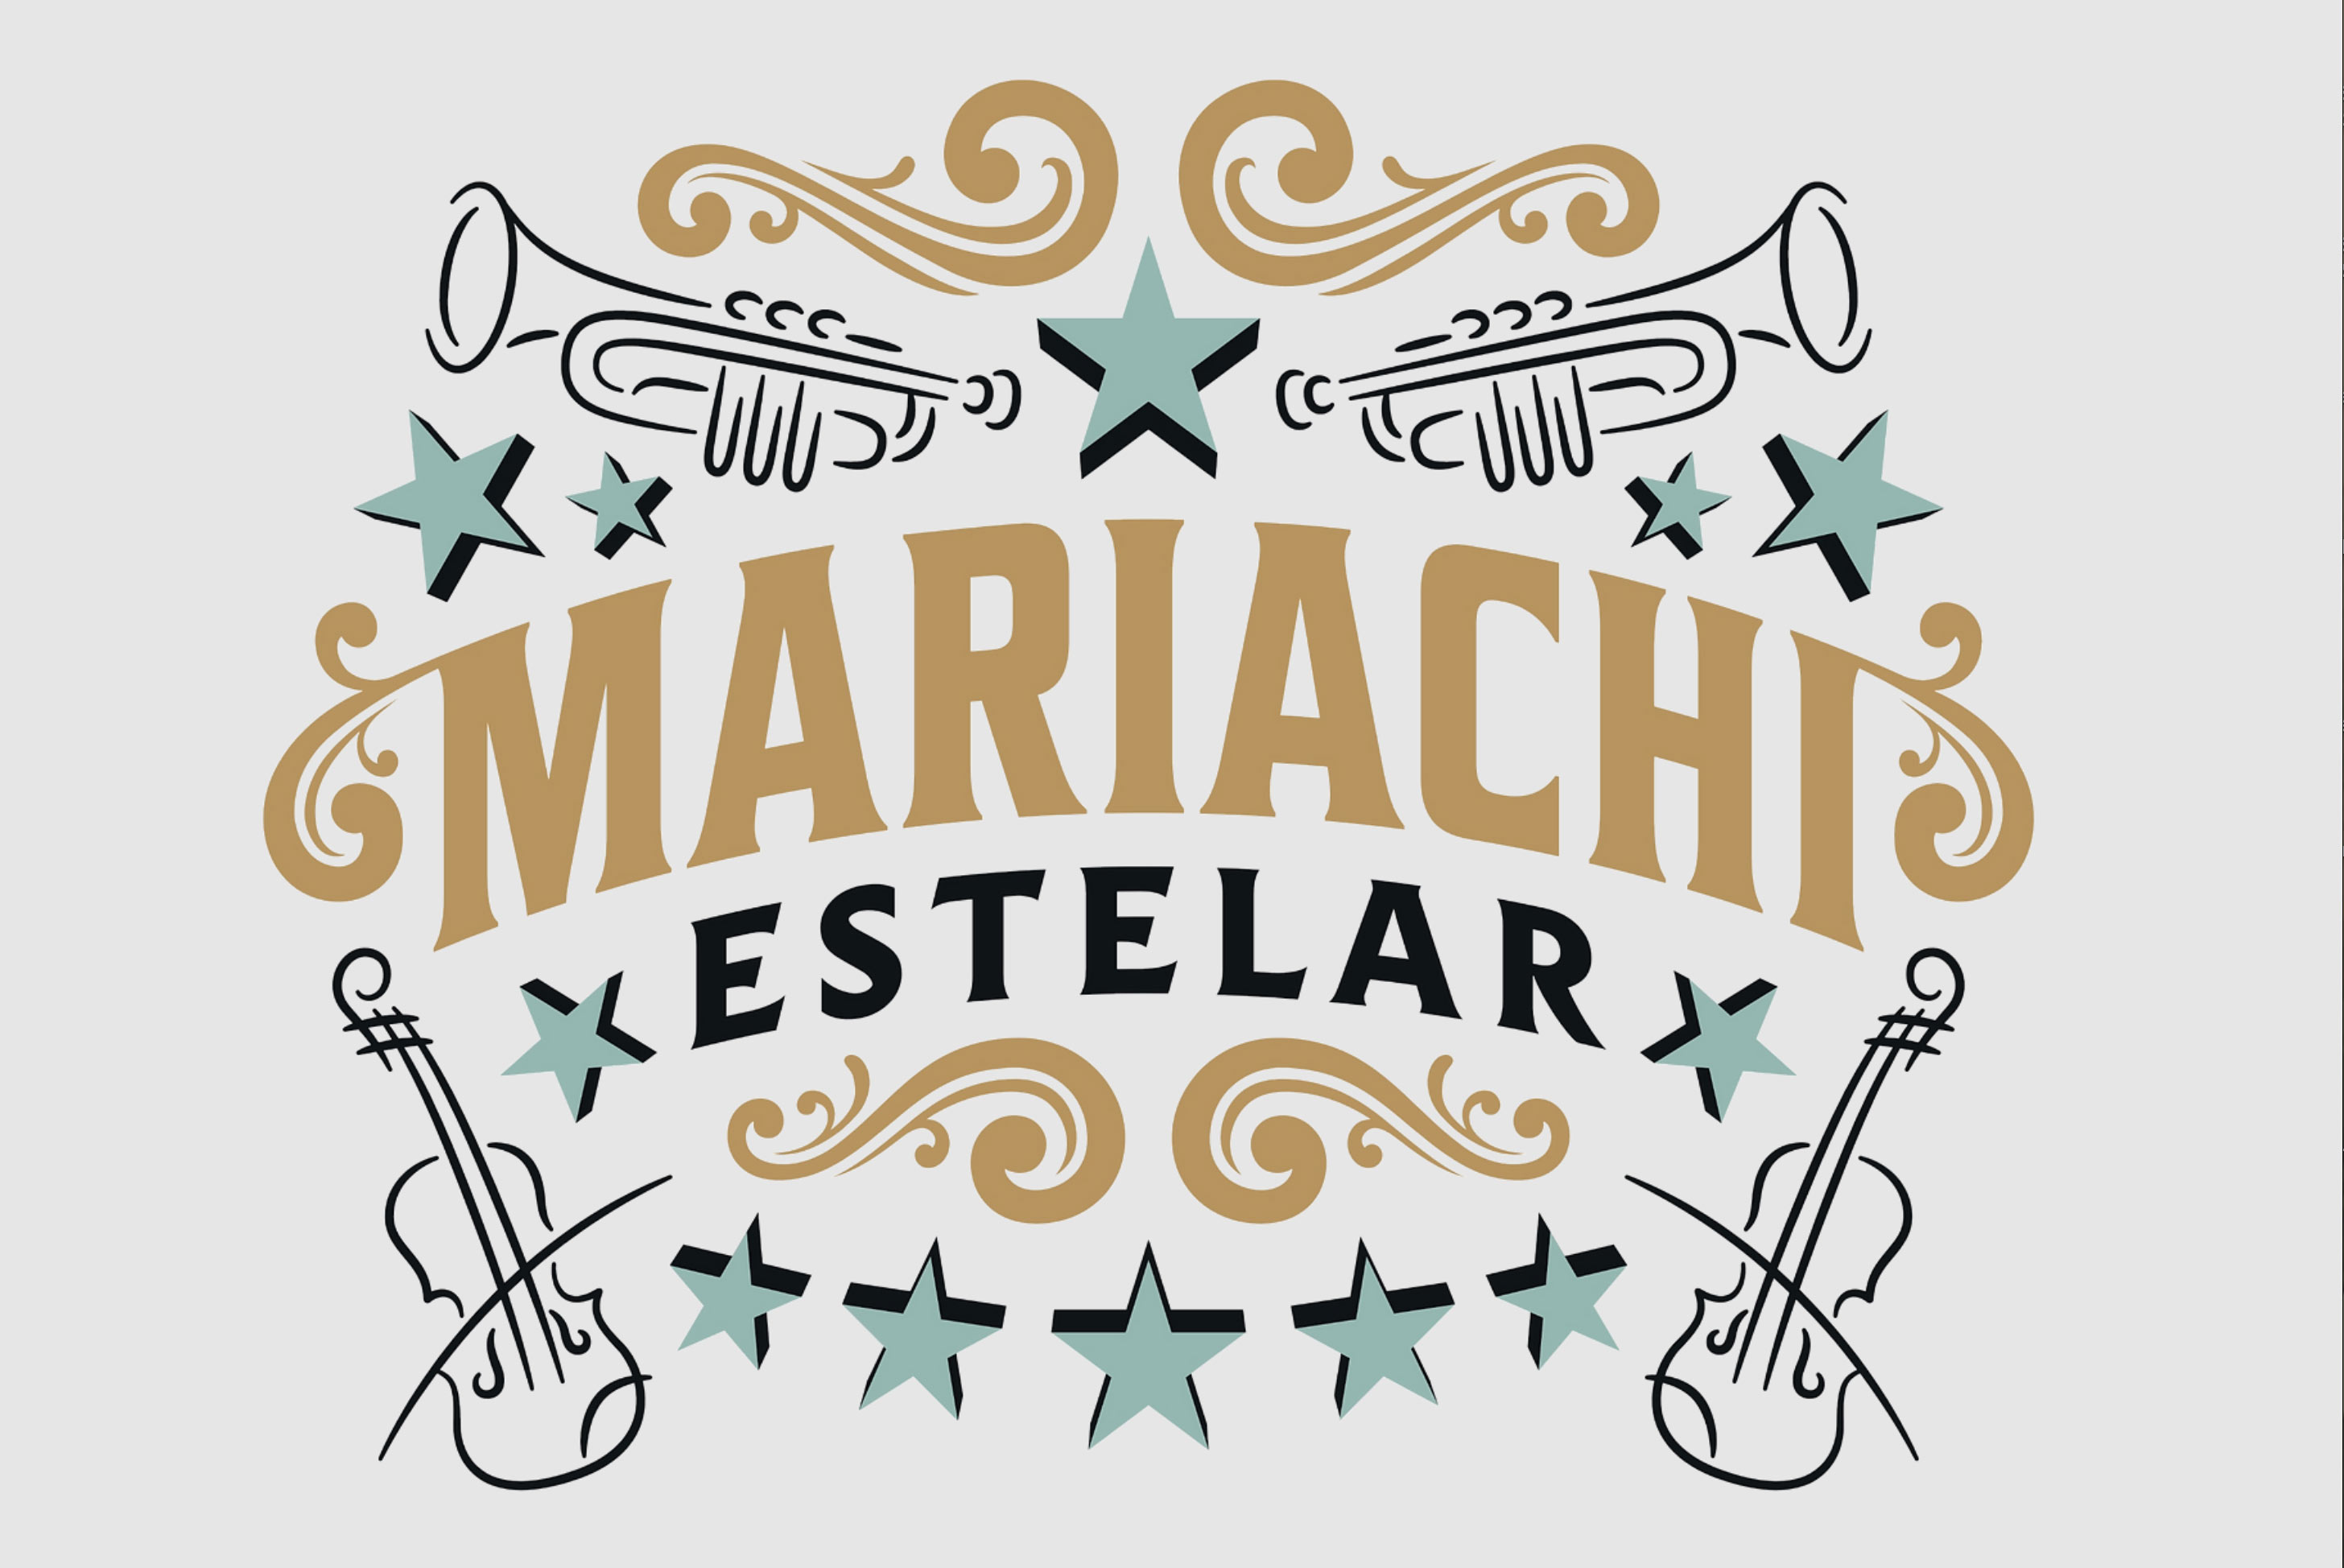 Mariachi Estelar